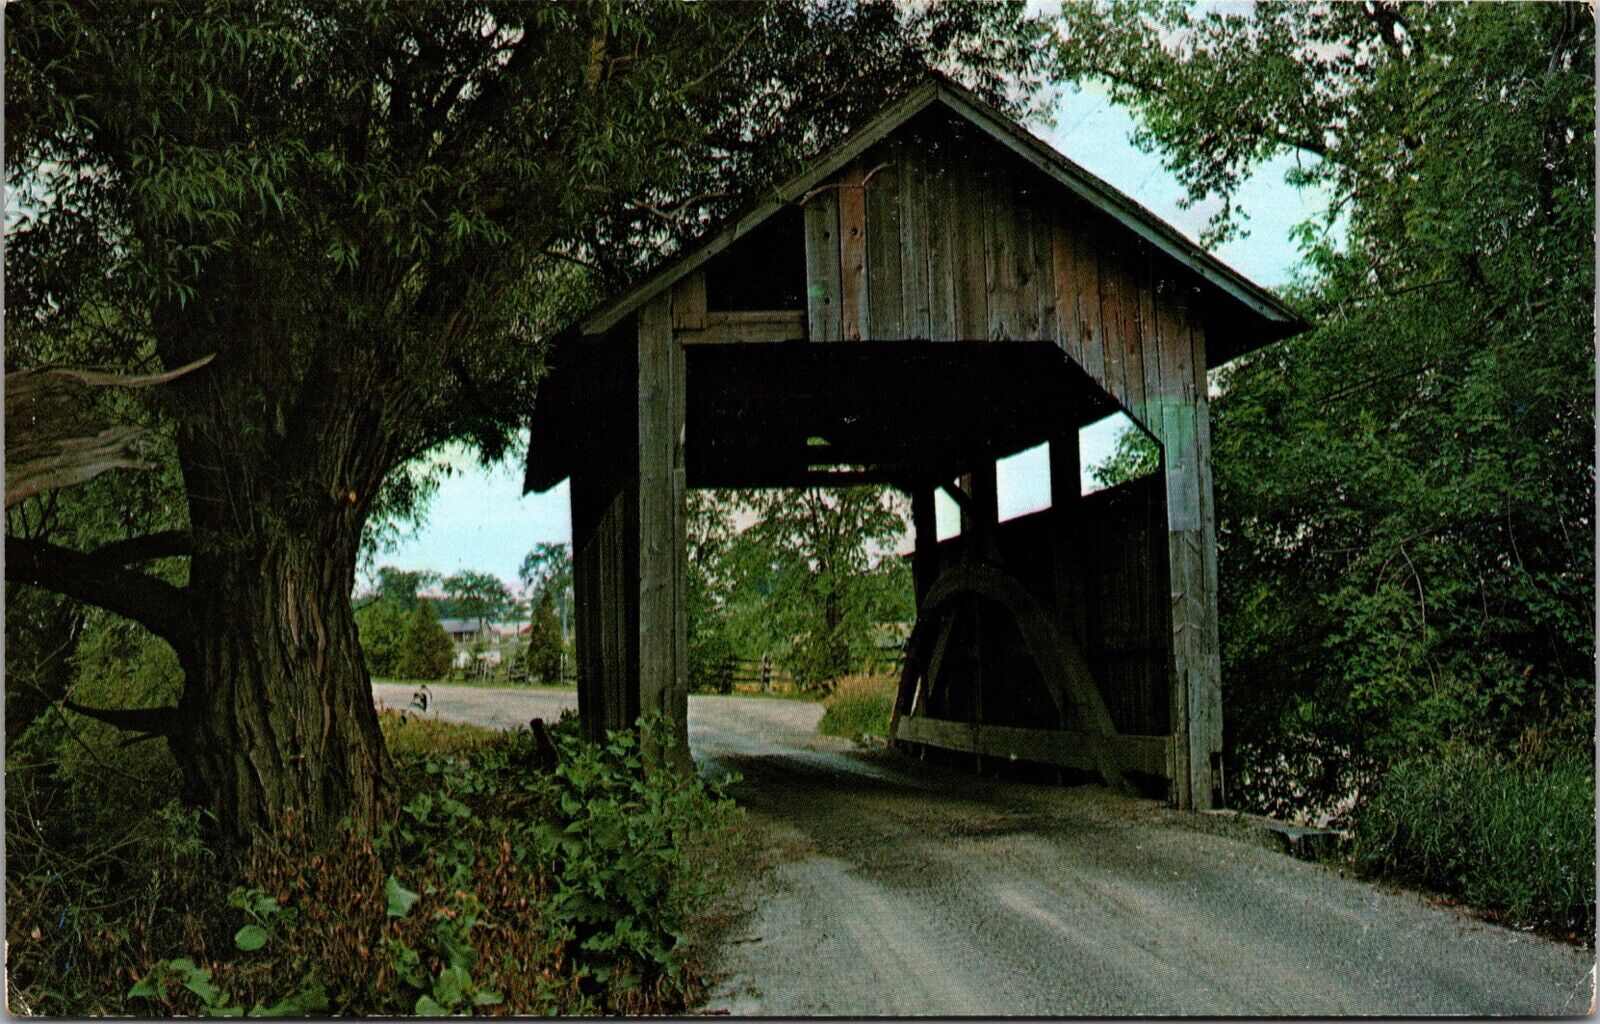 Postcard - Old Covered Bridge - Charlotte, Vermont